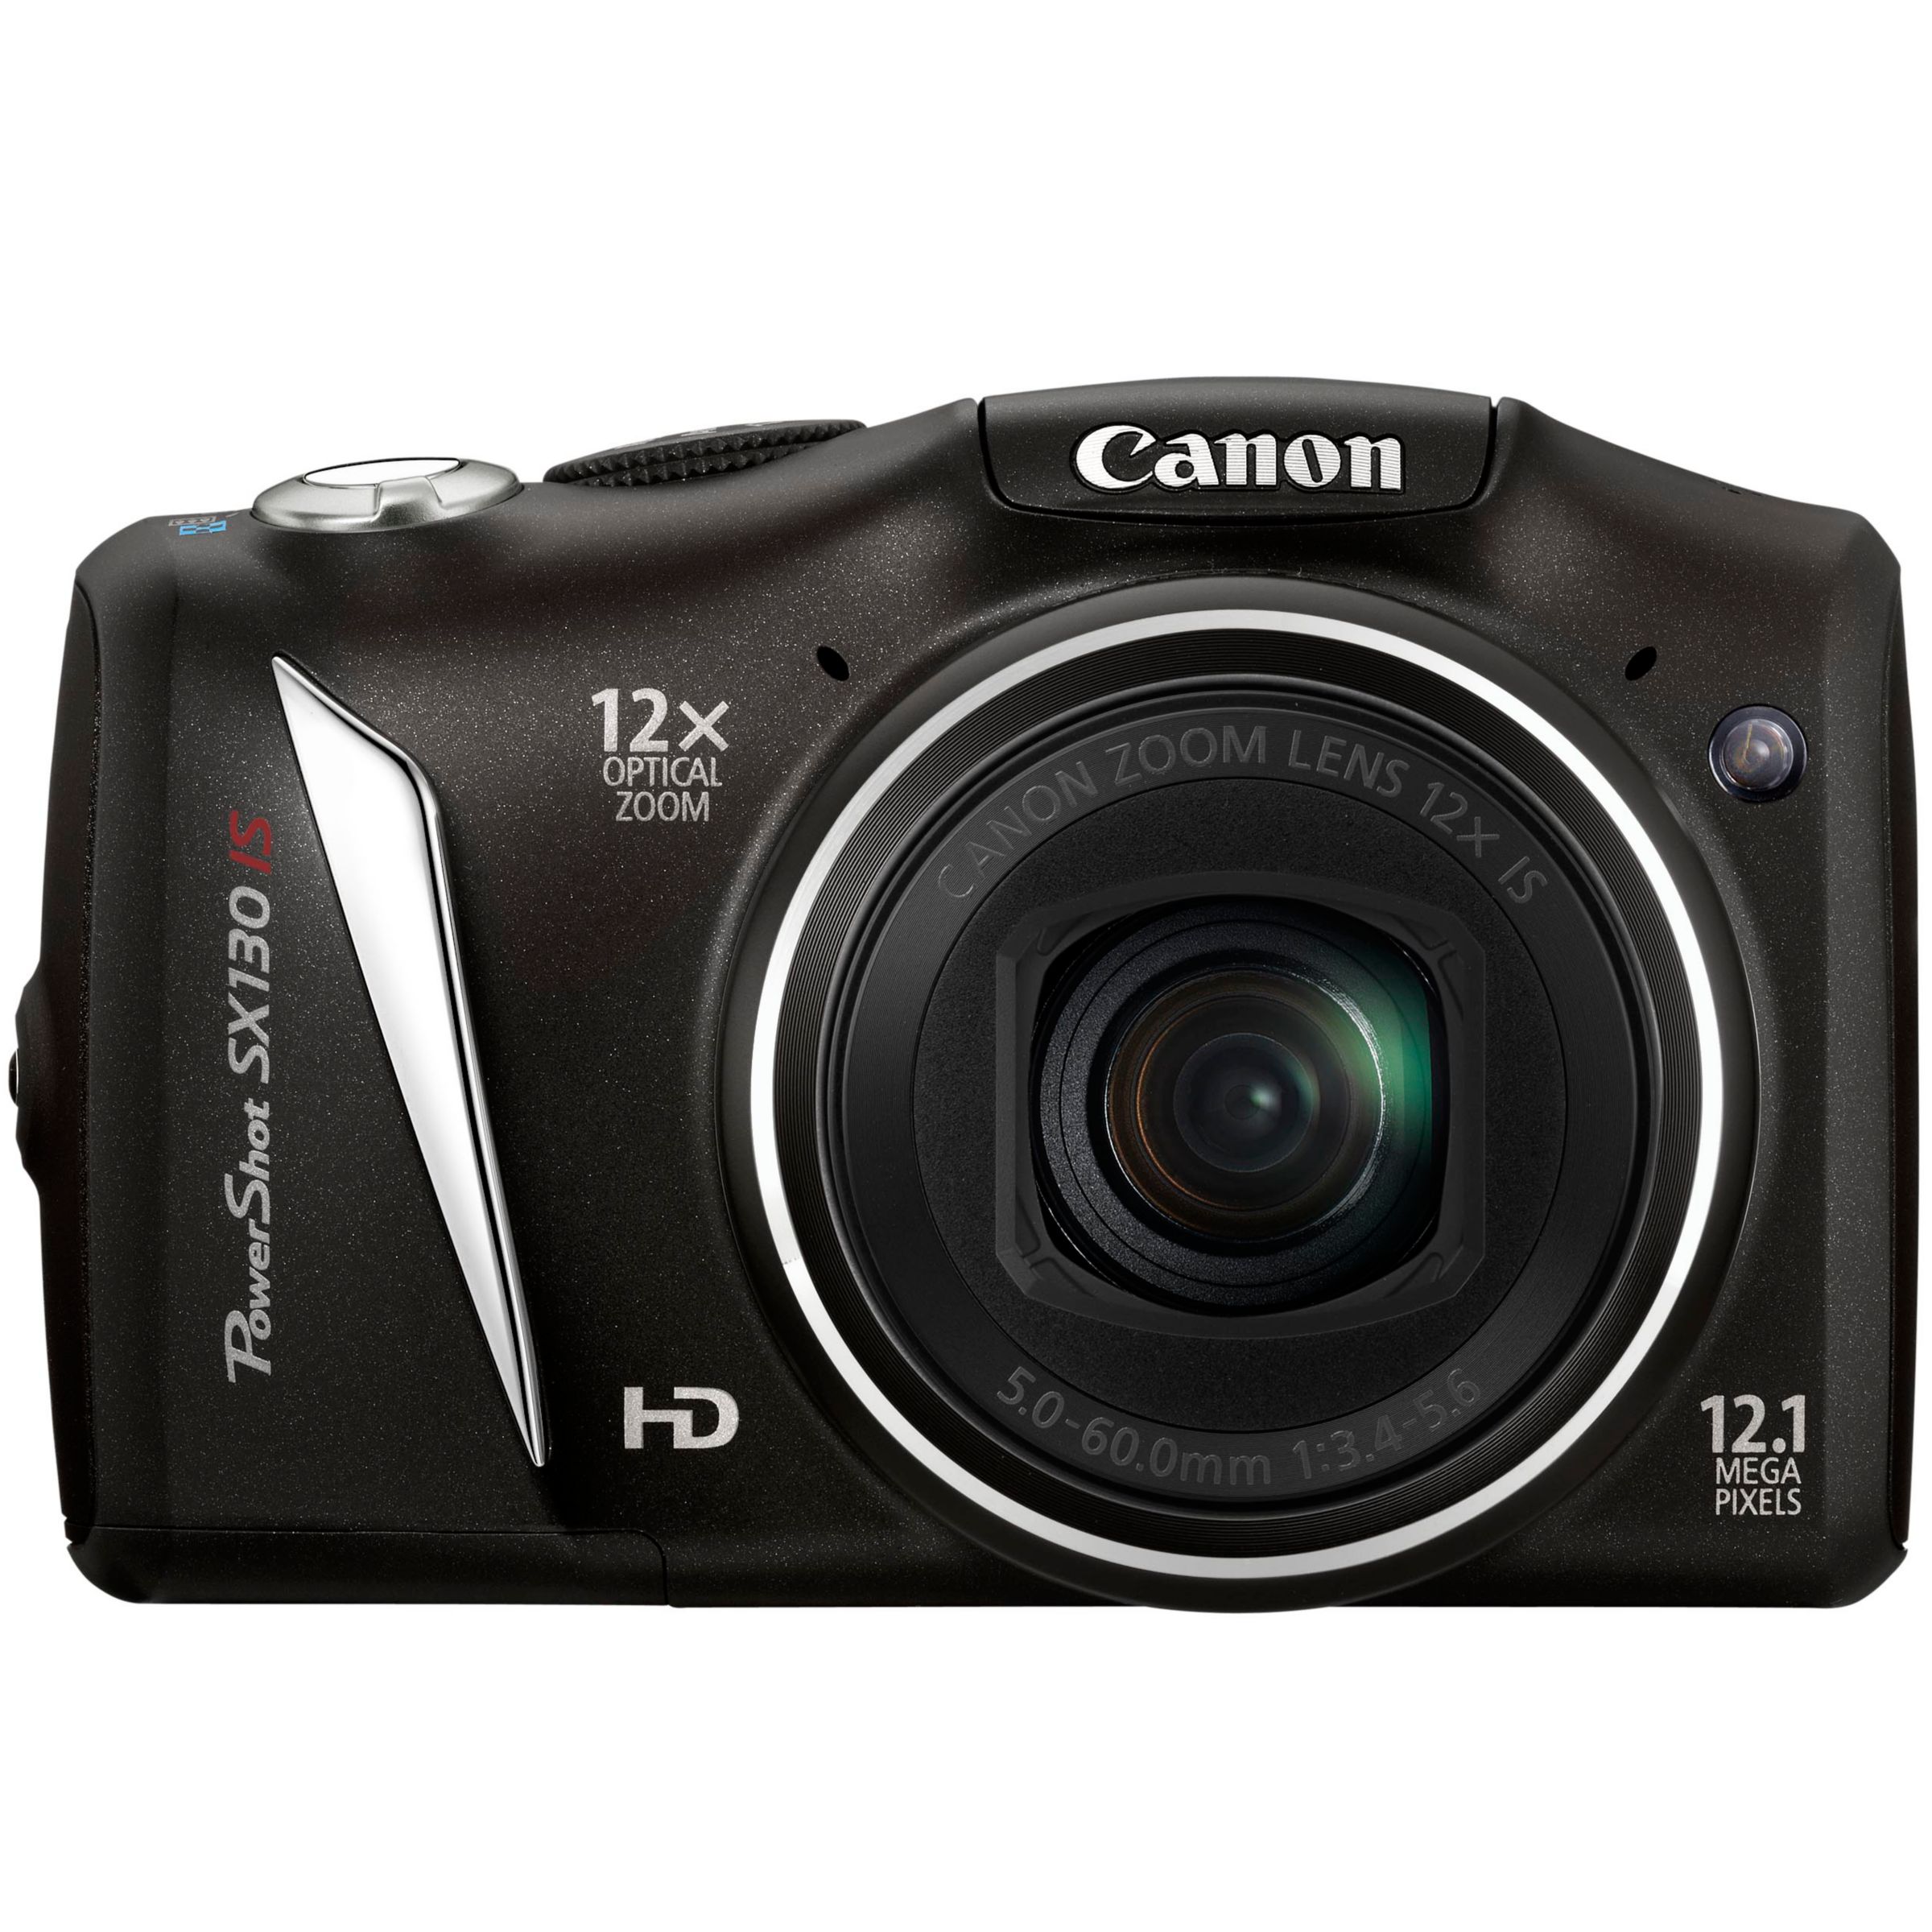 Canon Powershot SX130 IS Digital Camera, Black at JohnLewis